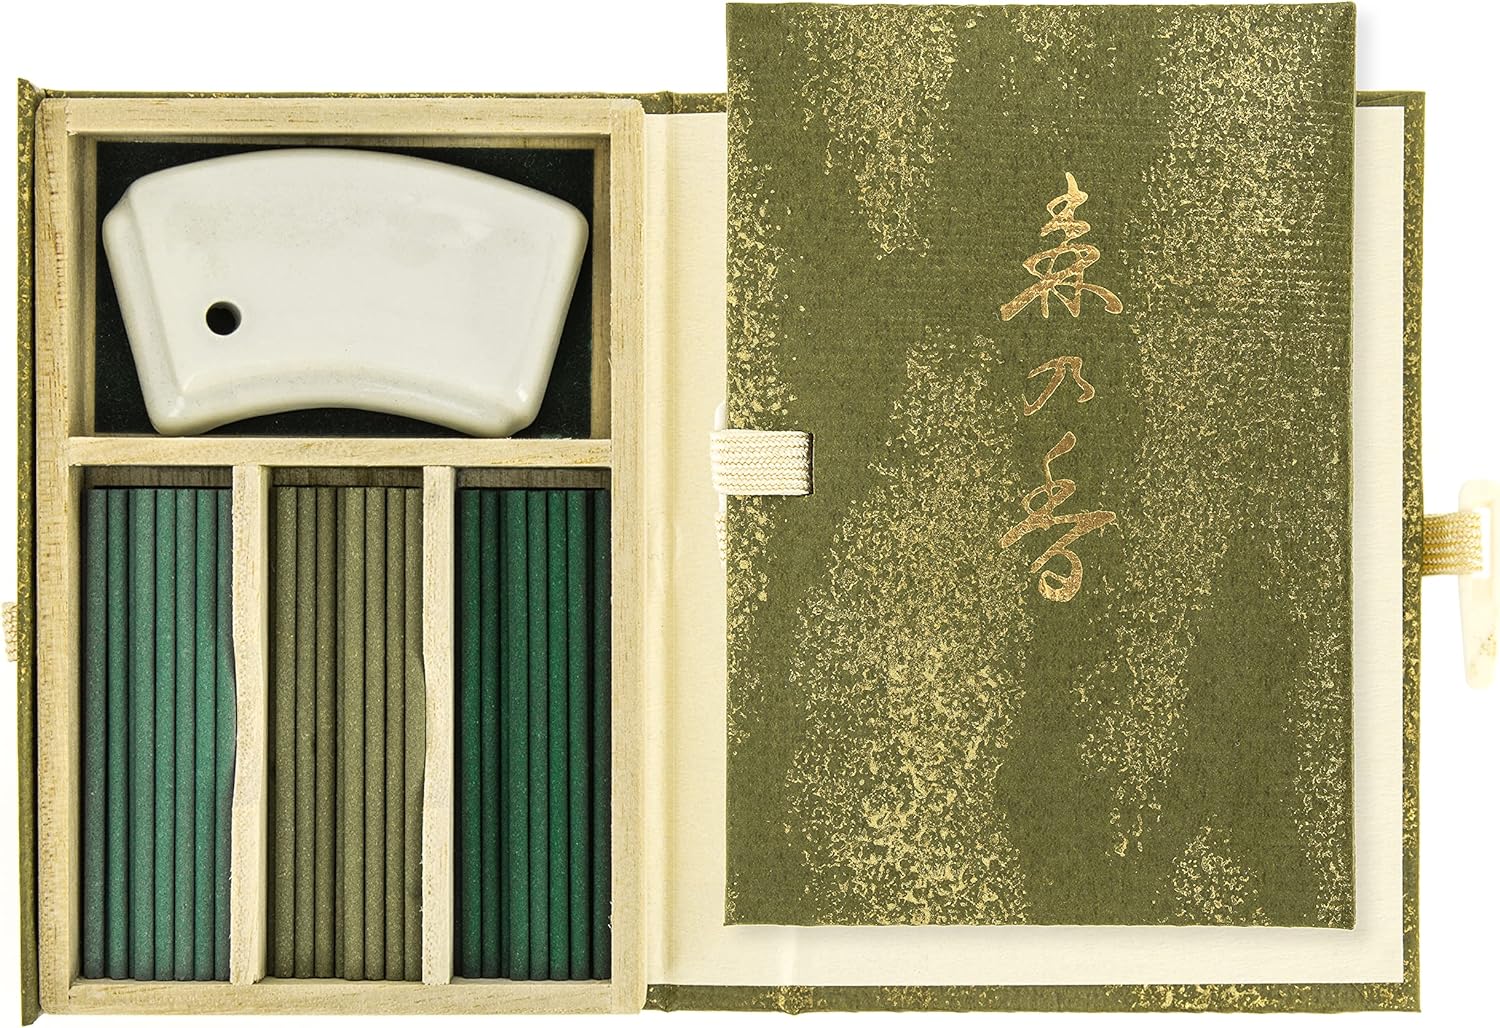 NipponKodo 日本香堂 森之香 线香 书本型包装 60根入  附香立